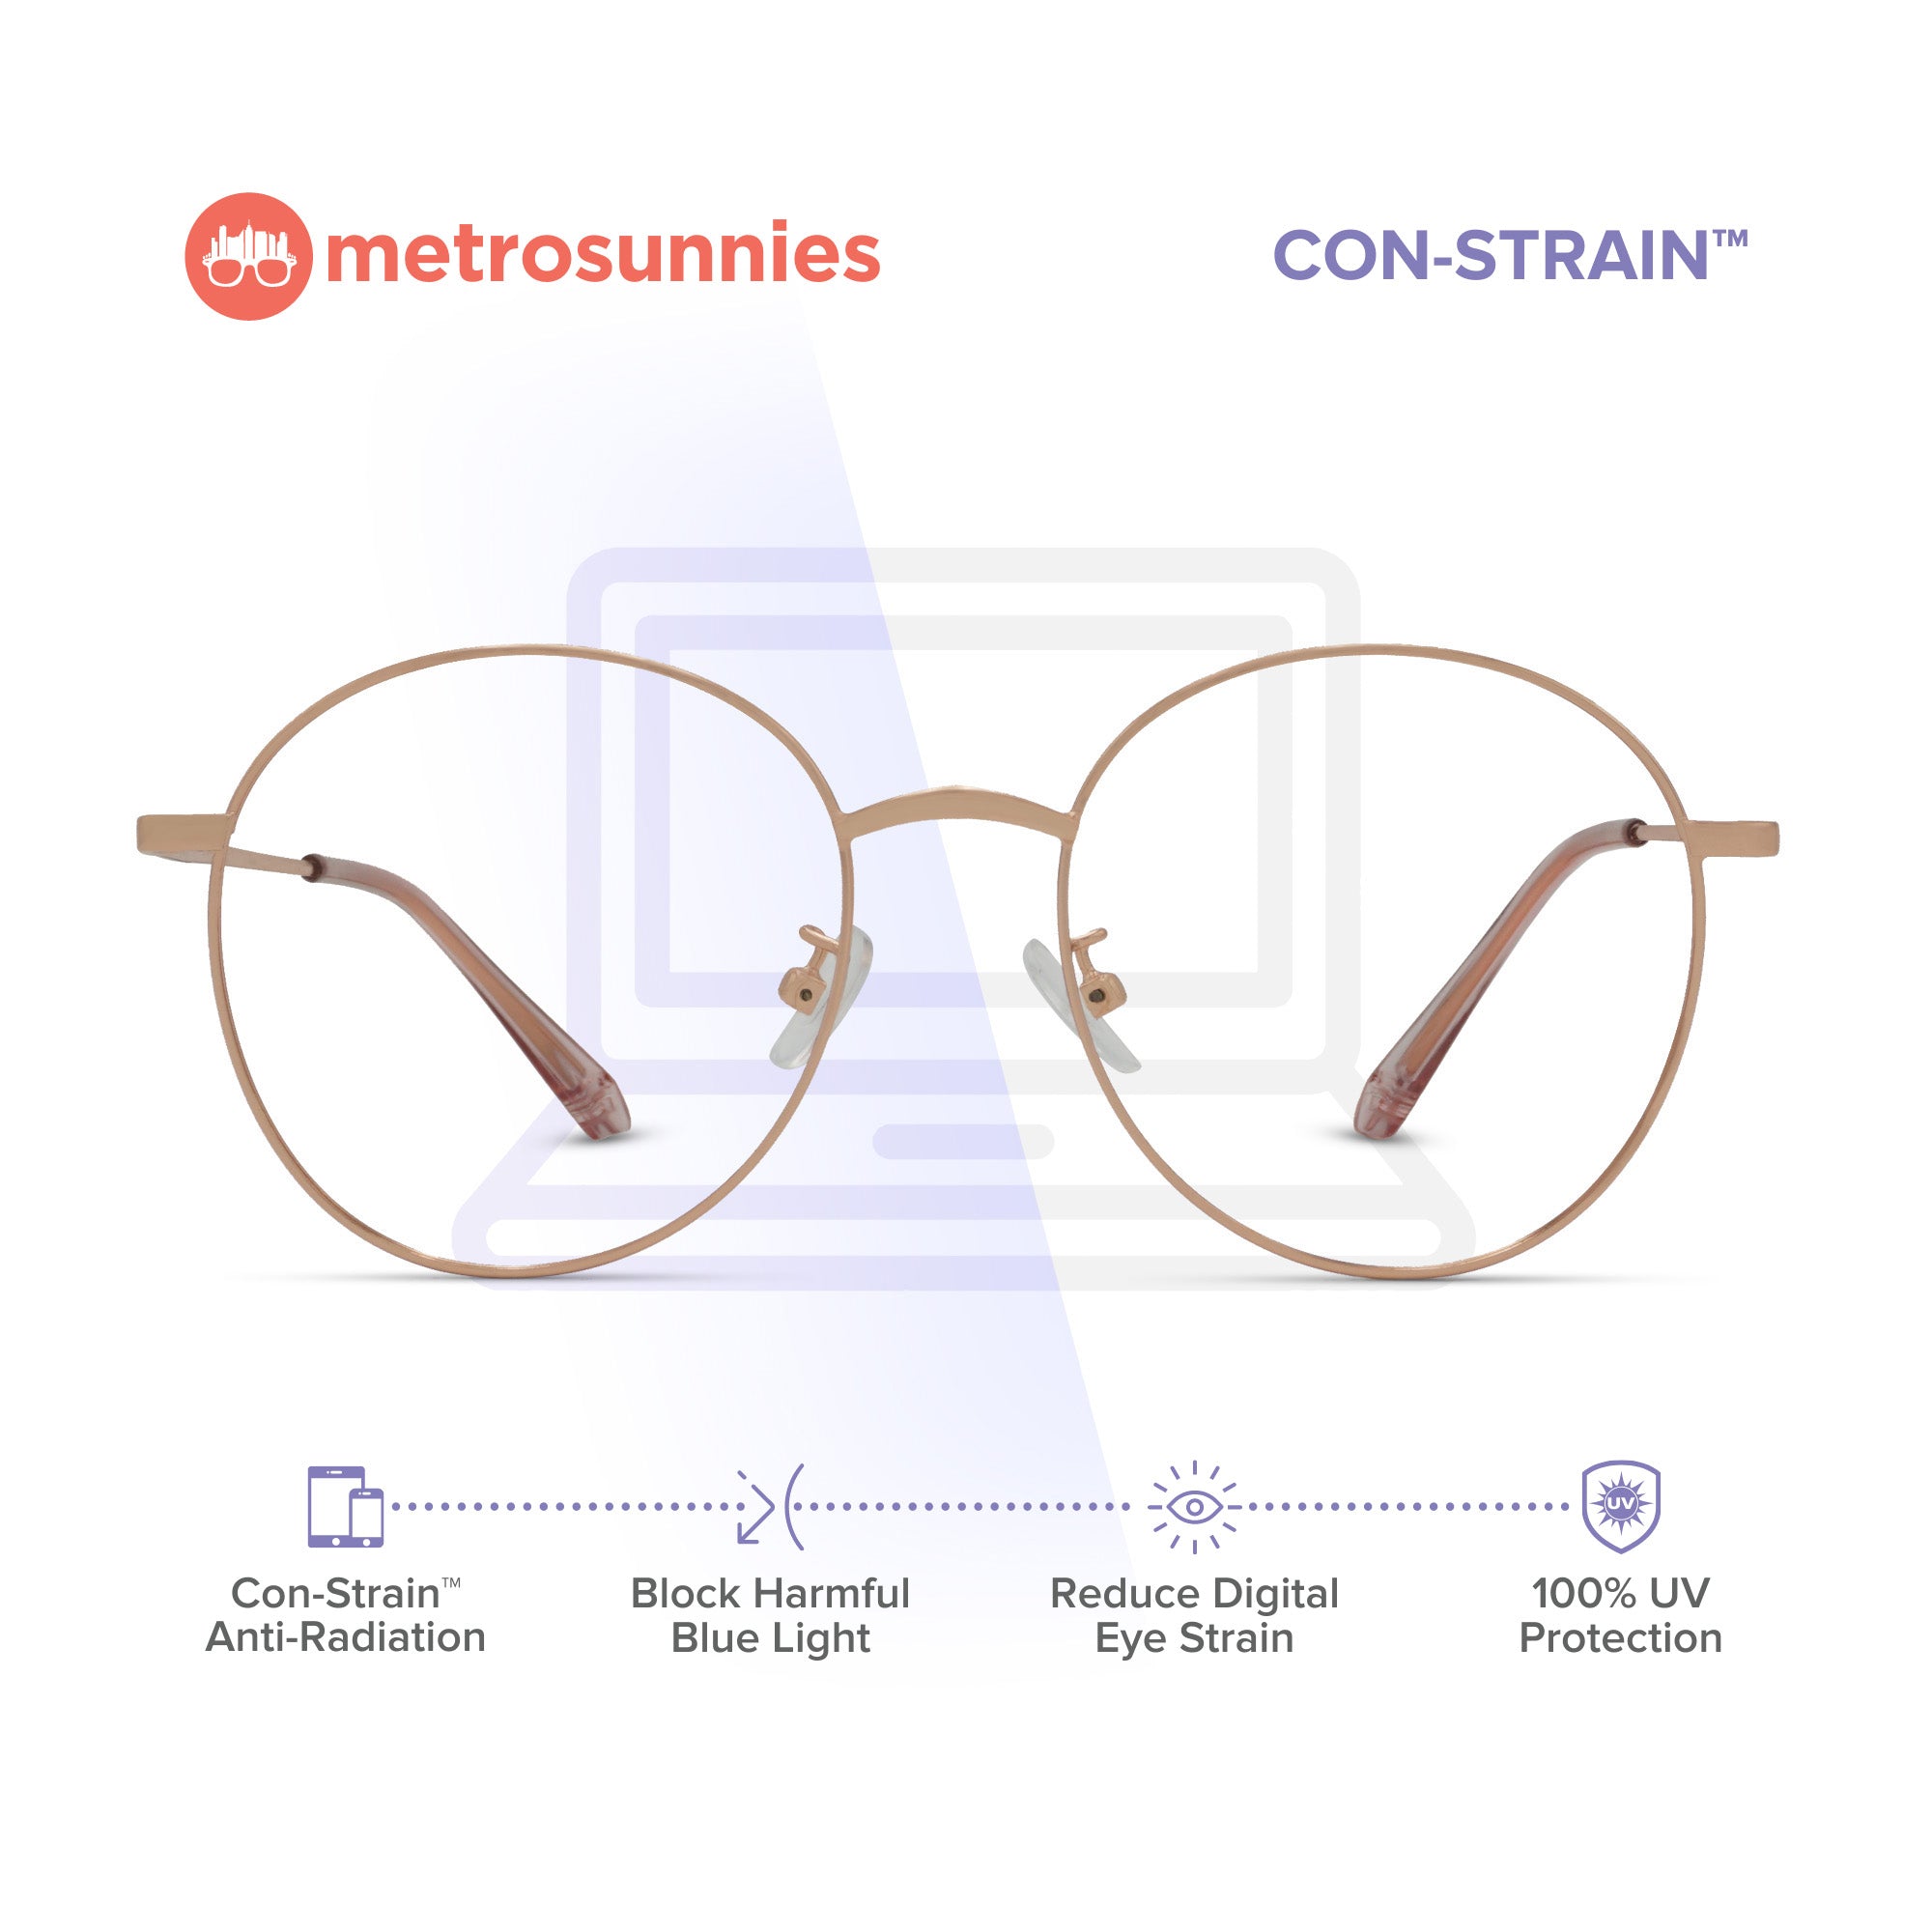 MetroSunnies Mason Specs (Rose Gold) / Con-Strain Blue Light / Anti-Radiation Computer Eyeglasses